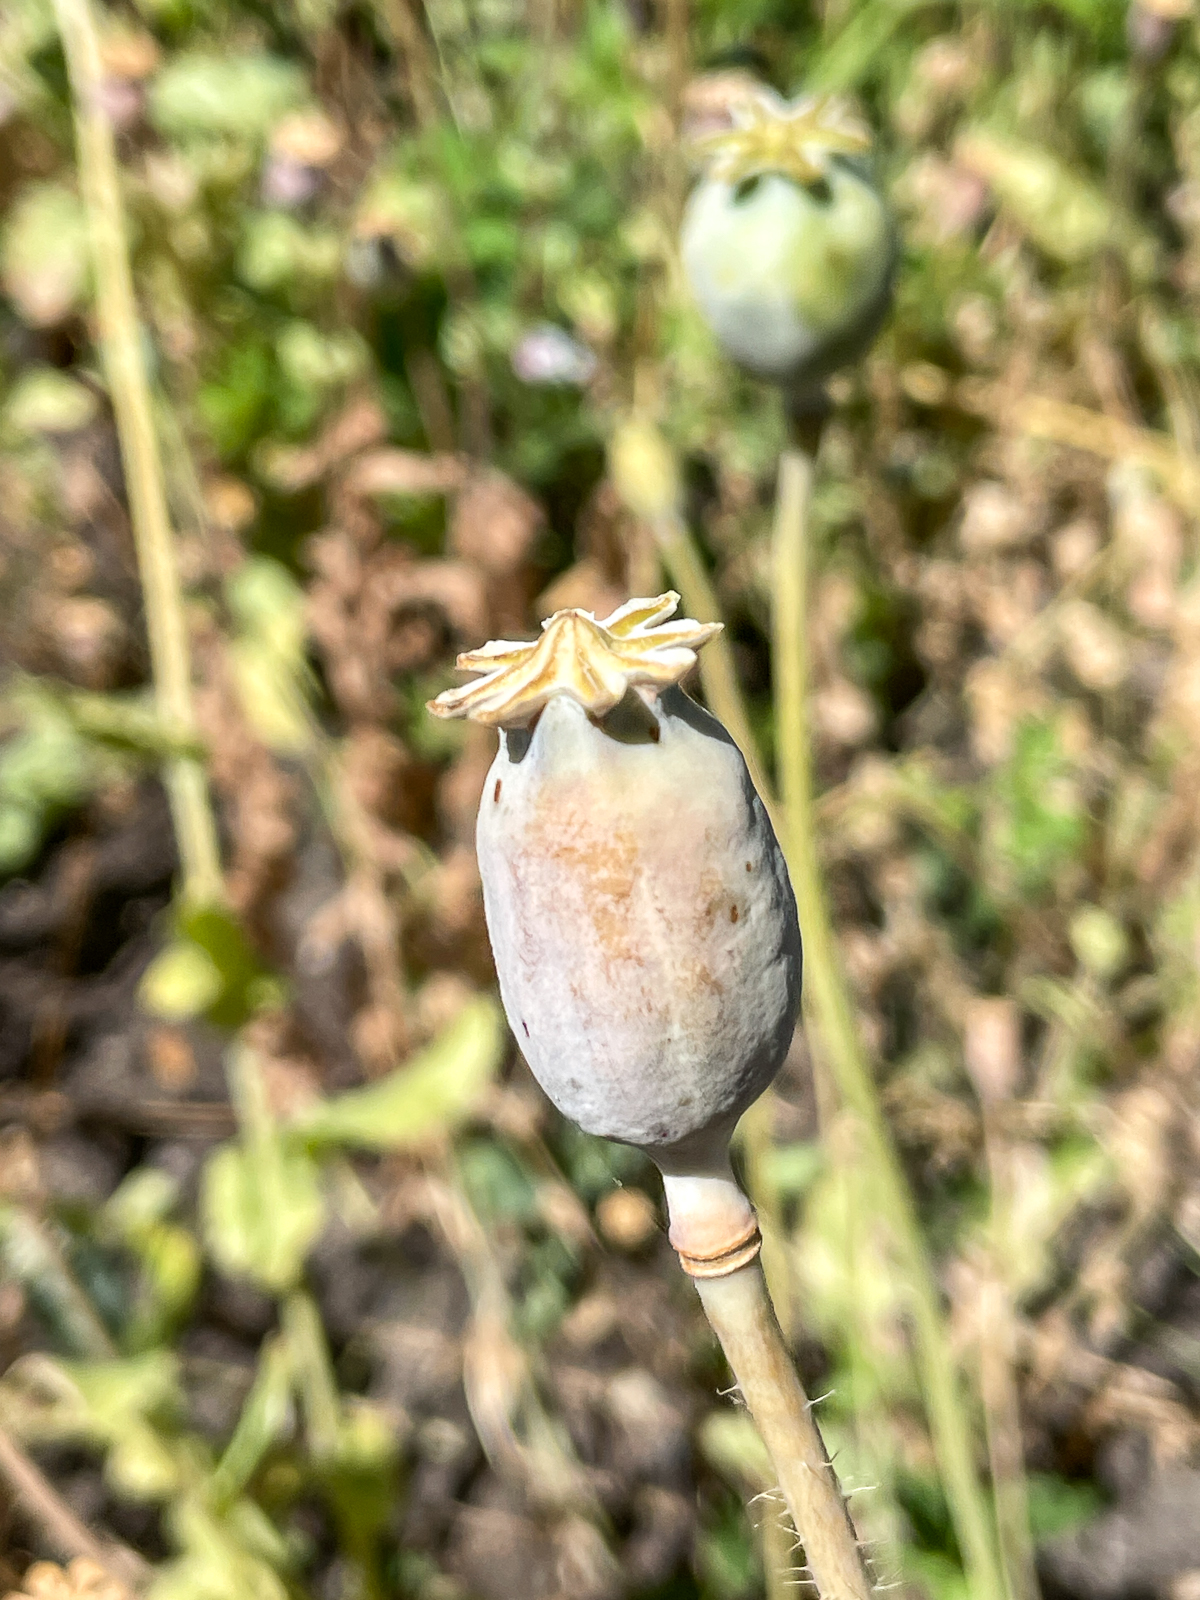 unripe poppy seed pods